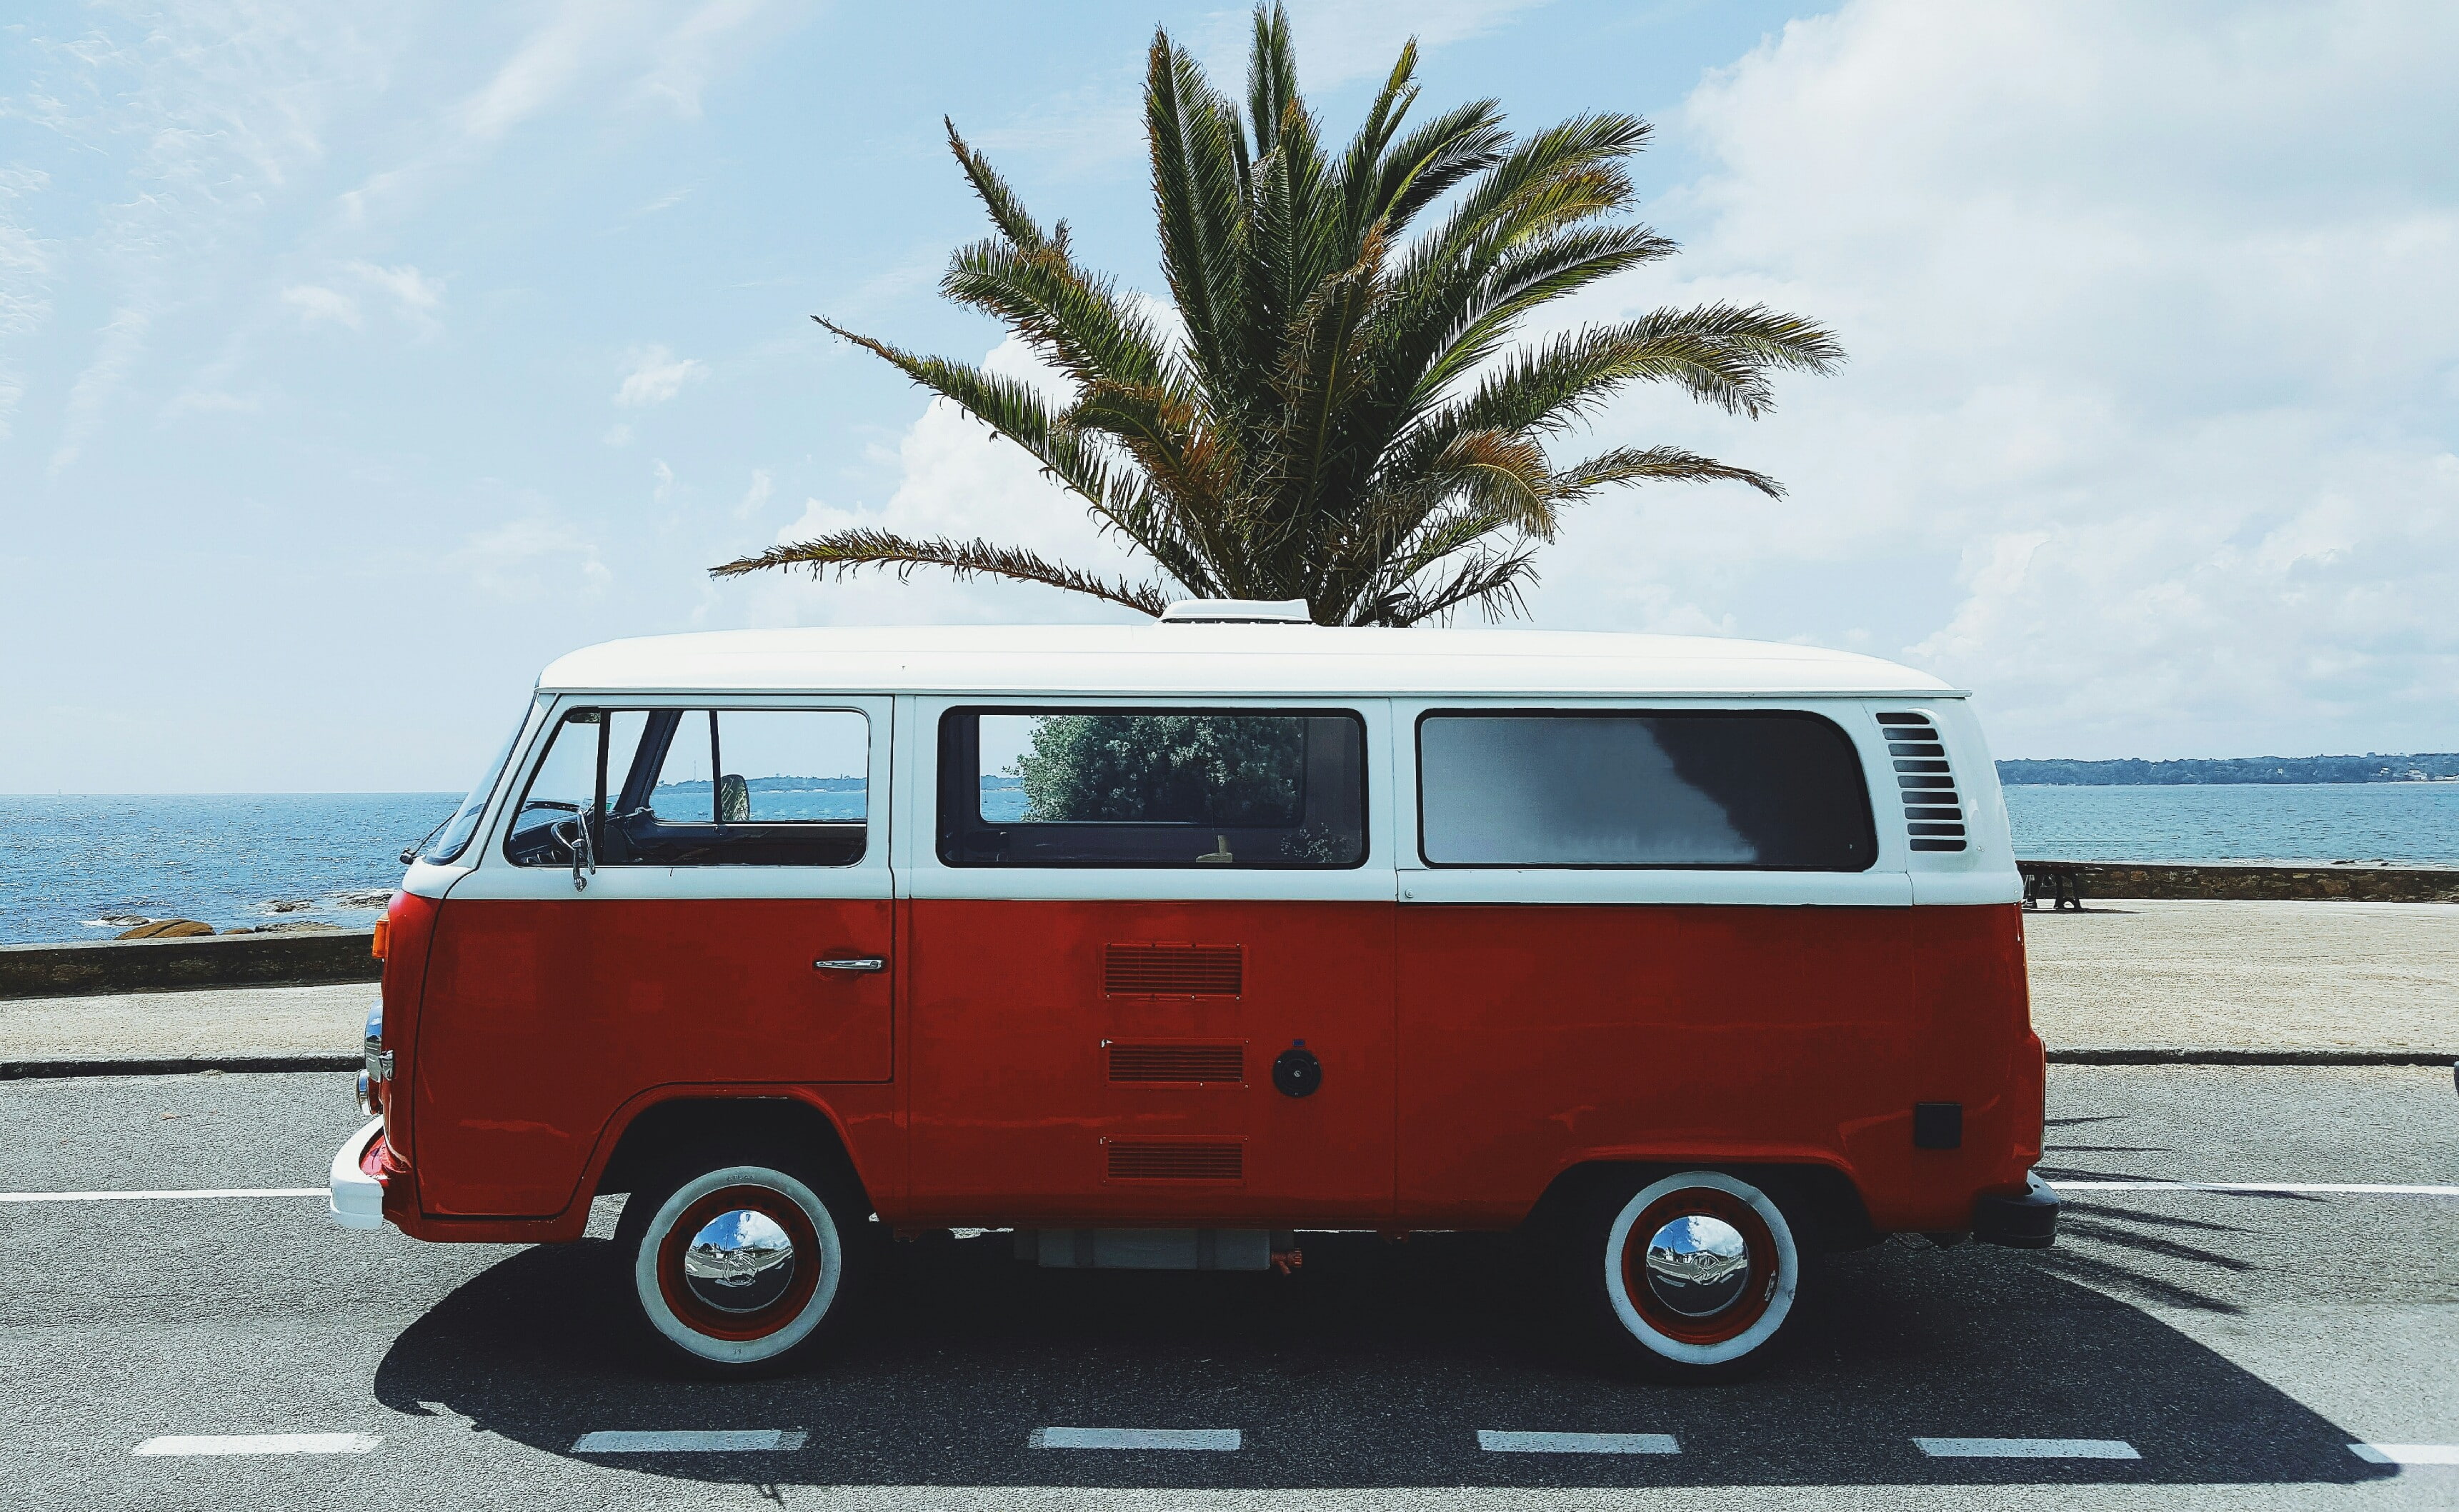 red, white, Concarneau, palm trees, vw bus, beach, France